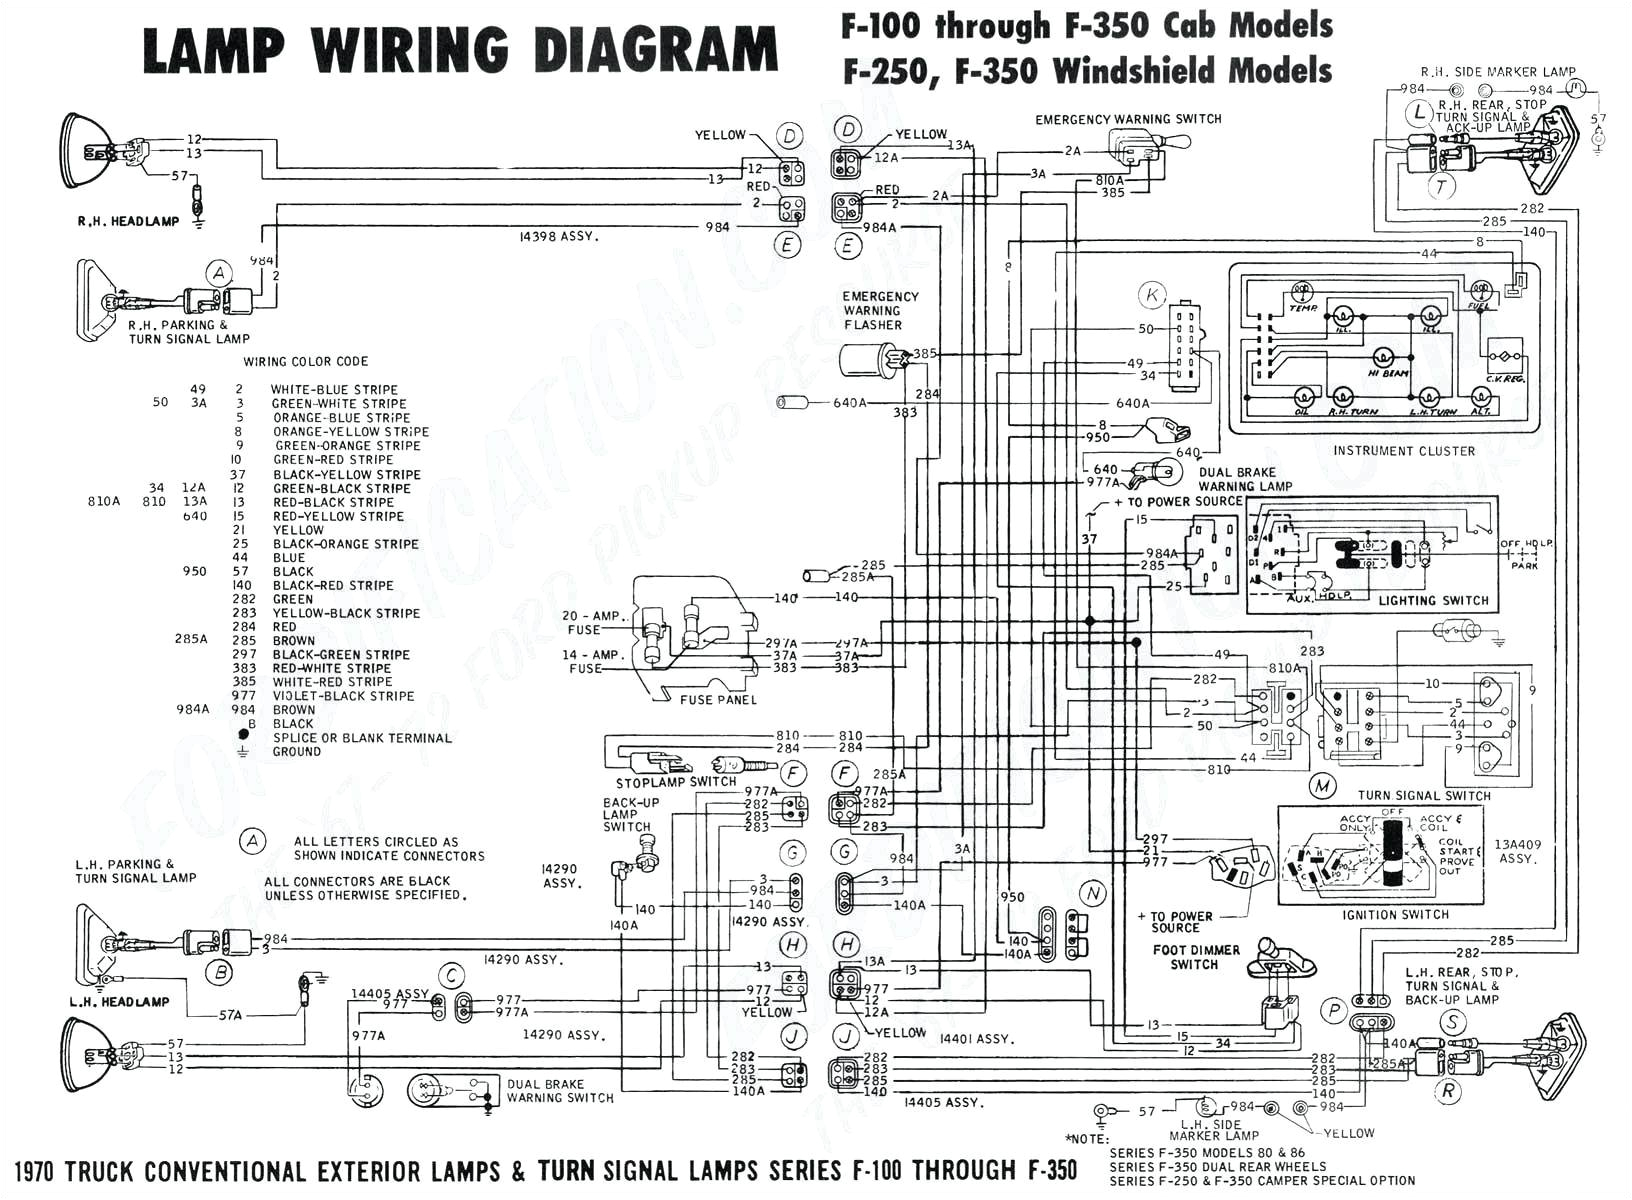 0 10 Volt Dimming Wiring Diagram Watt Stopper Dimming Wiring Diagram My Wiring Diagram